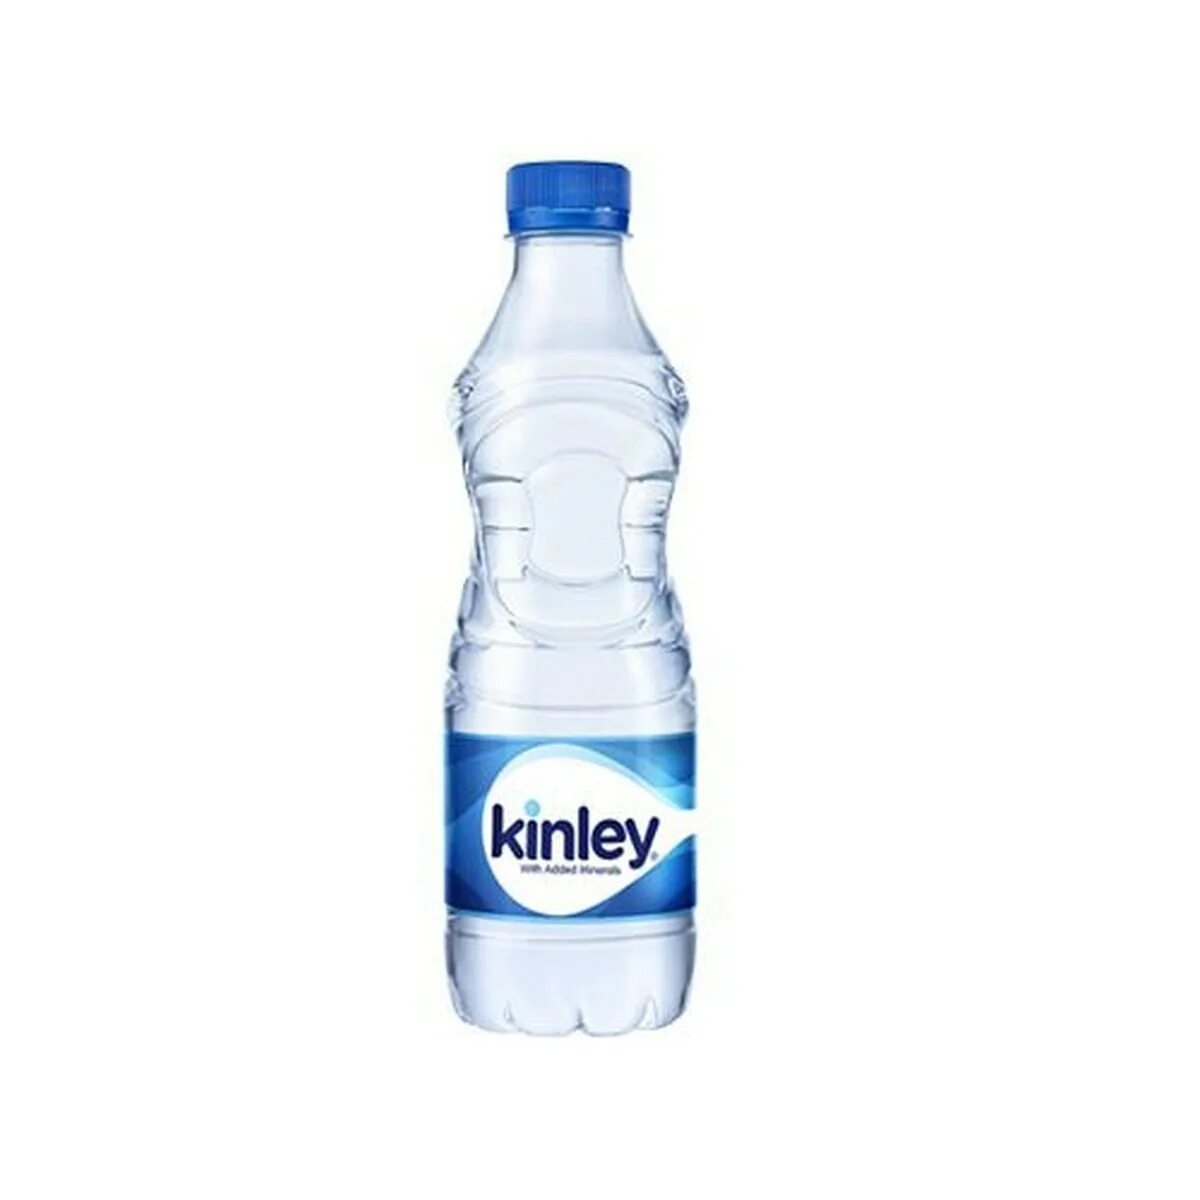 Бутылка для воды. Минеральная вода в бутылках. Бутылка воды на прозрачном фоне. Kinley напиток. 1 litre ru